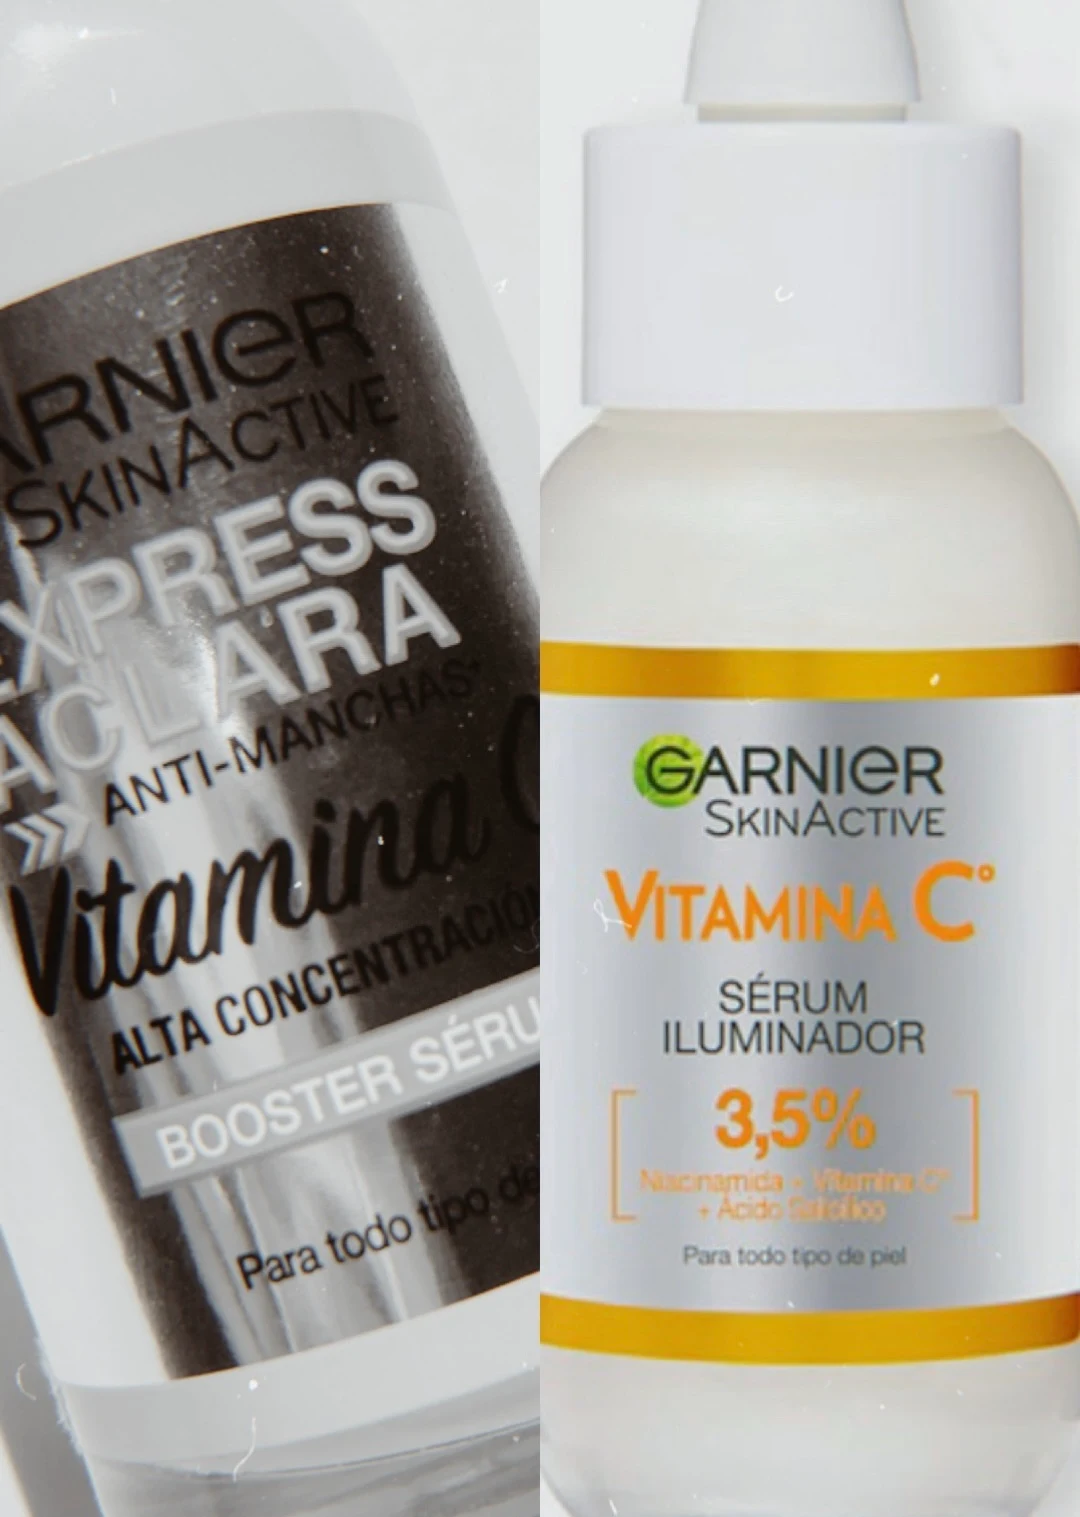 garnier express aclara anti manchas vitamina c concentrado booster garnier argentina precio donde se vende